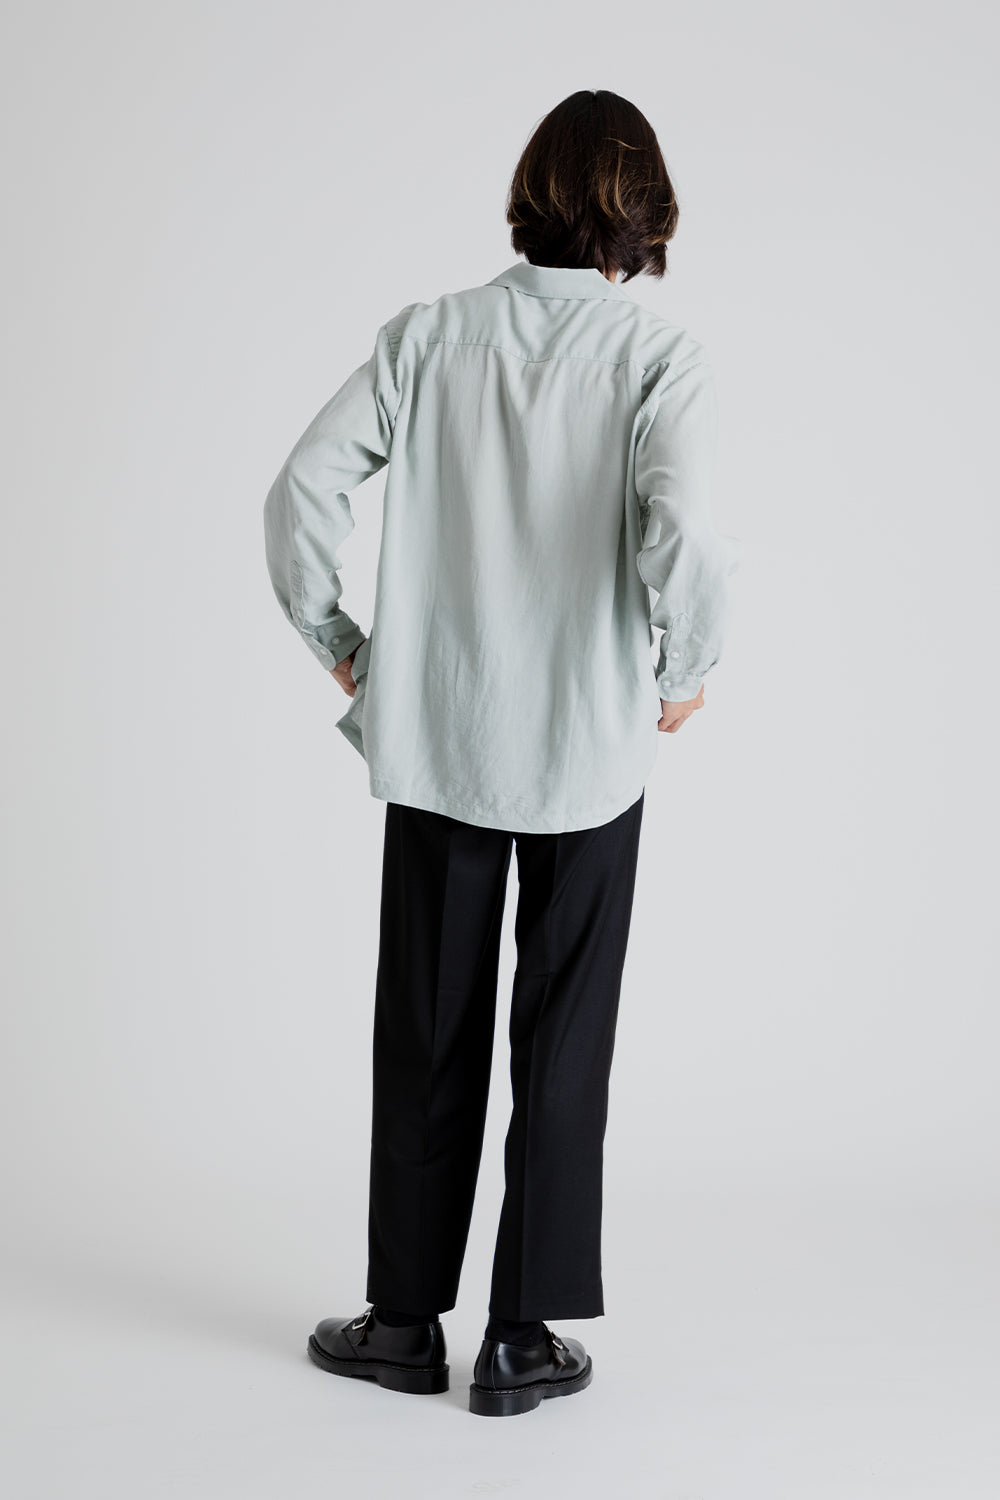 Frizmworks Tencel Cozy Shirt in Light Khaki